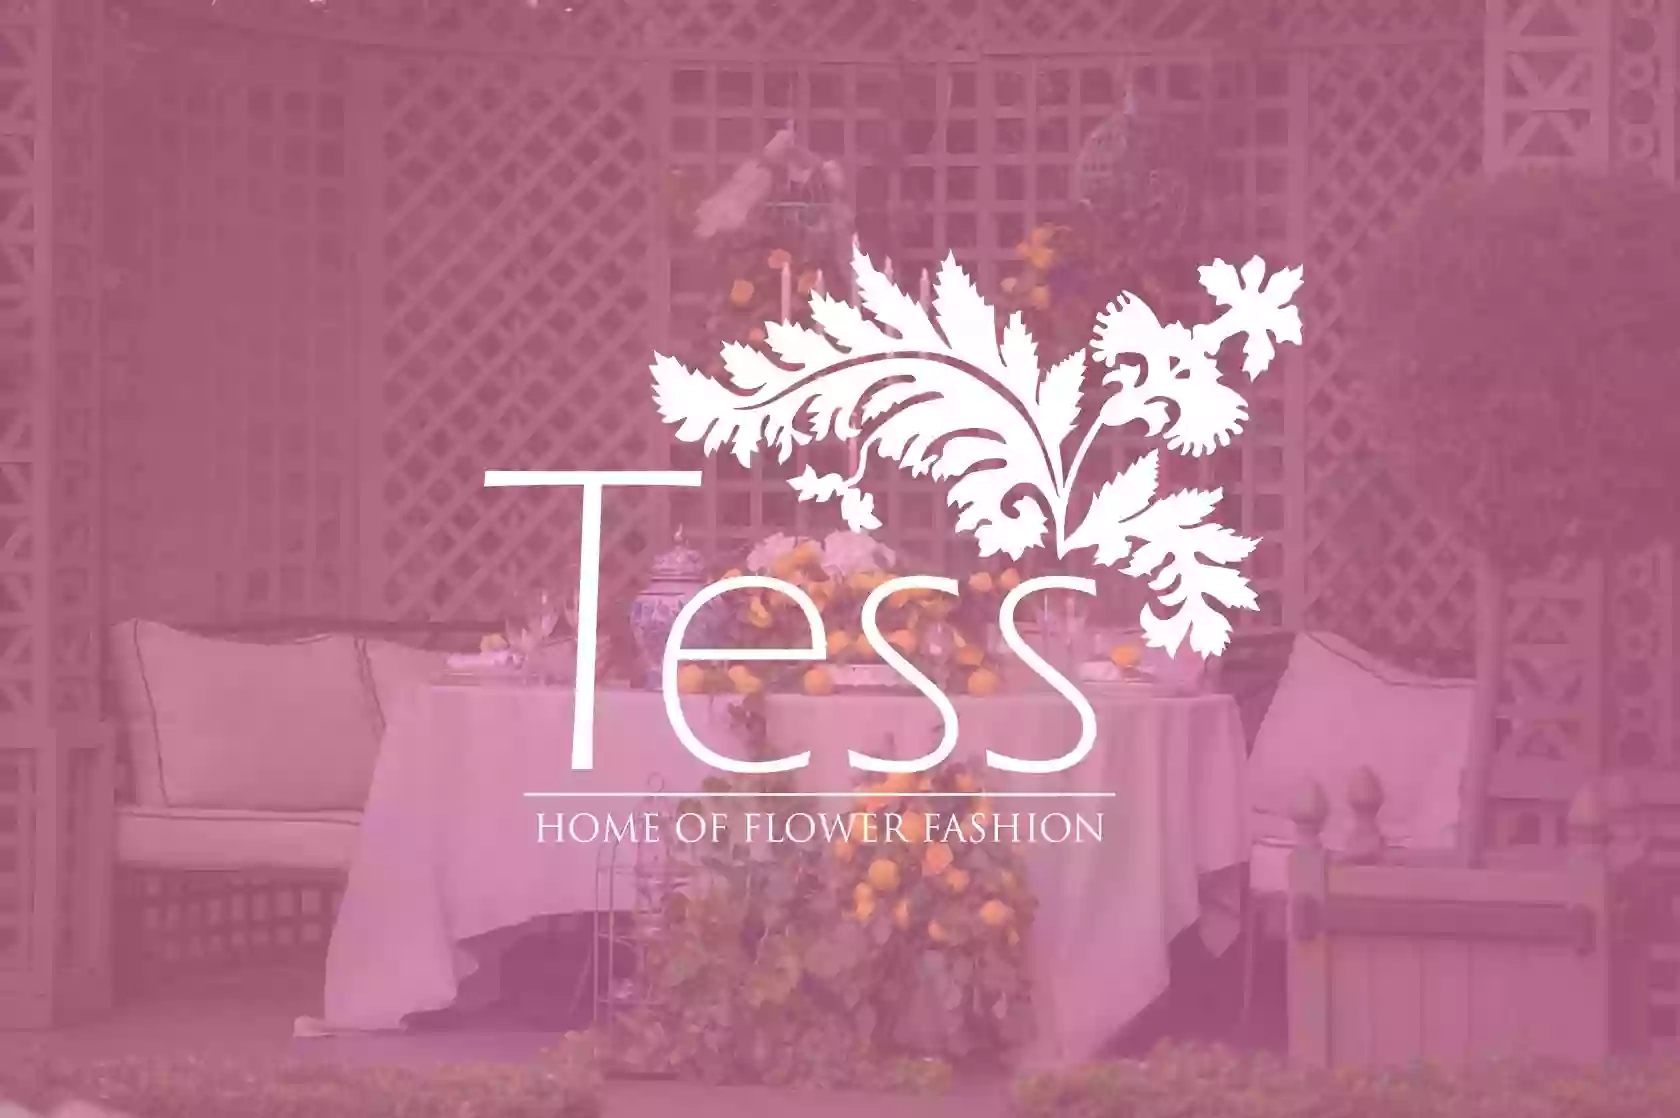 Дом цветочной моды Tess. Бутик флористики и декора.